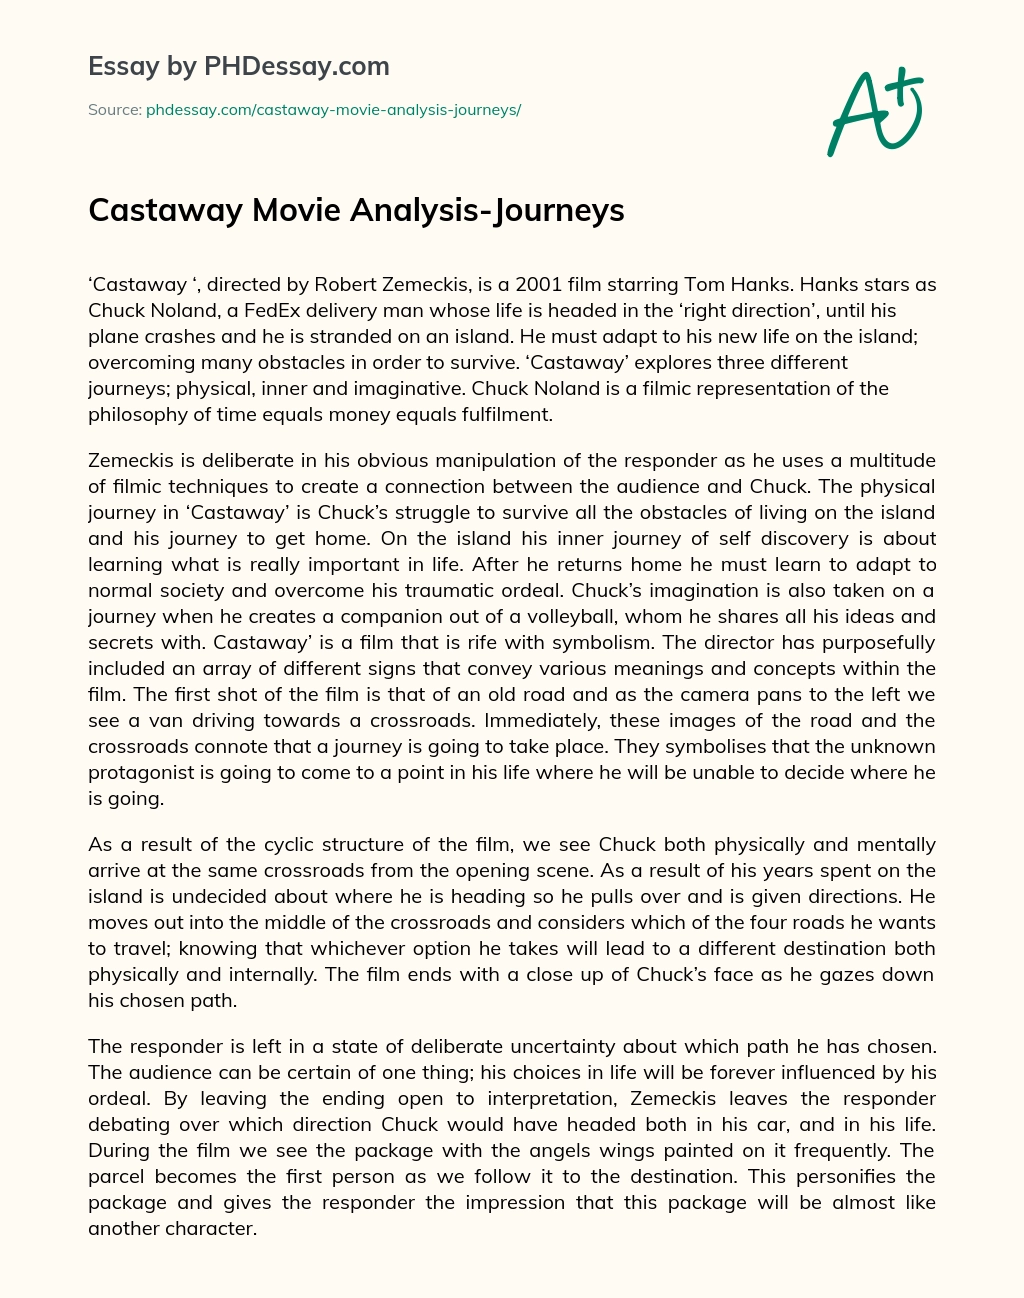 Castaway Movie Analysis-Journeys essay